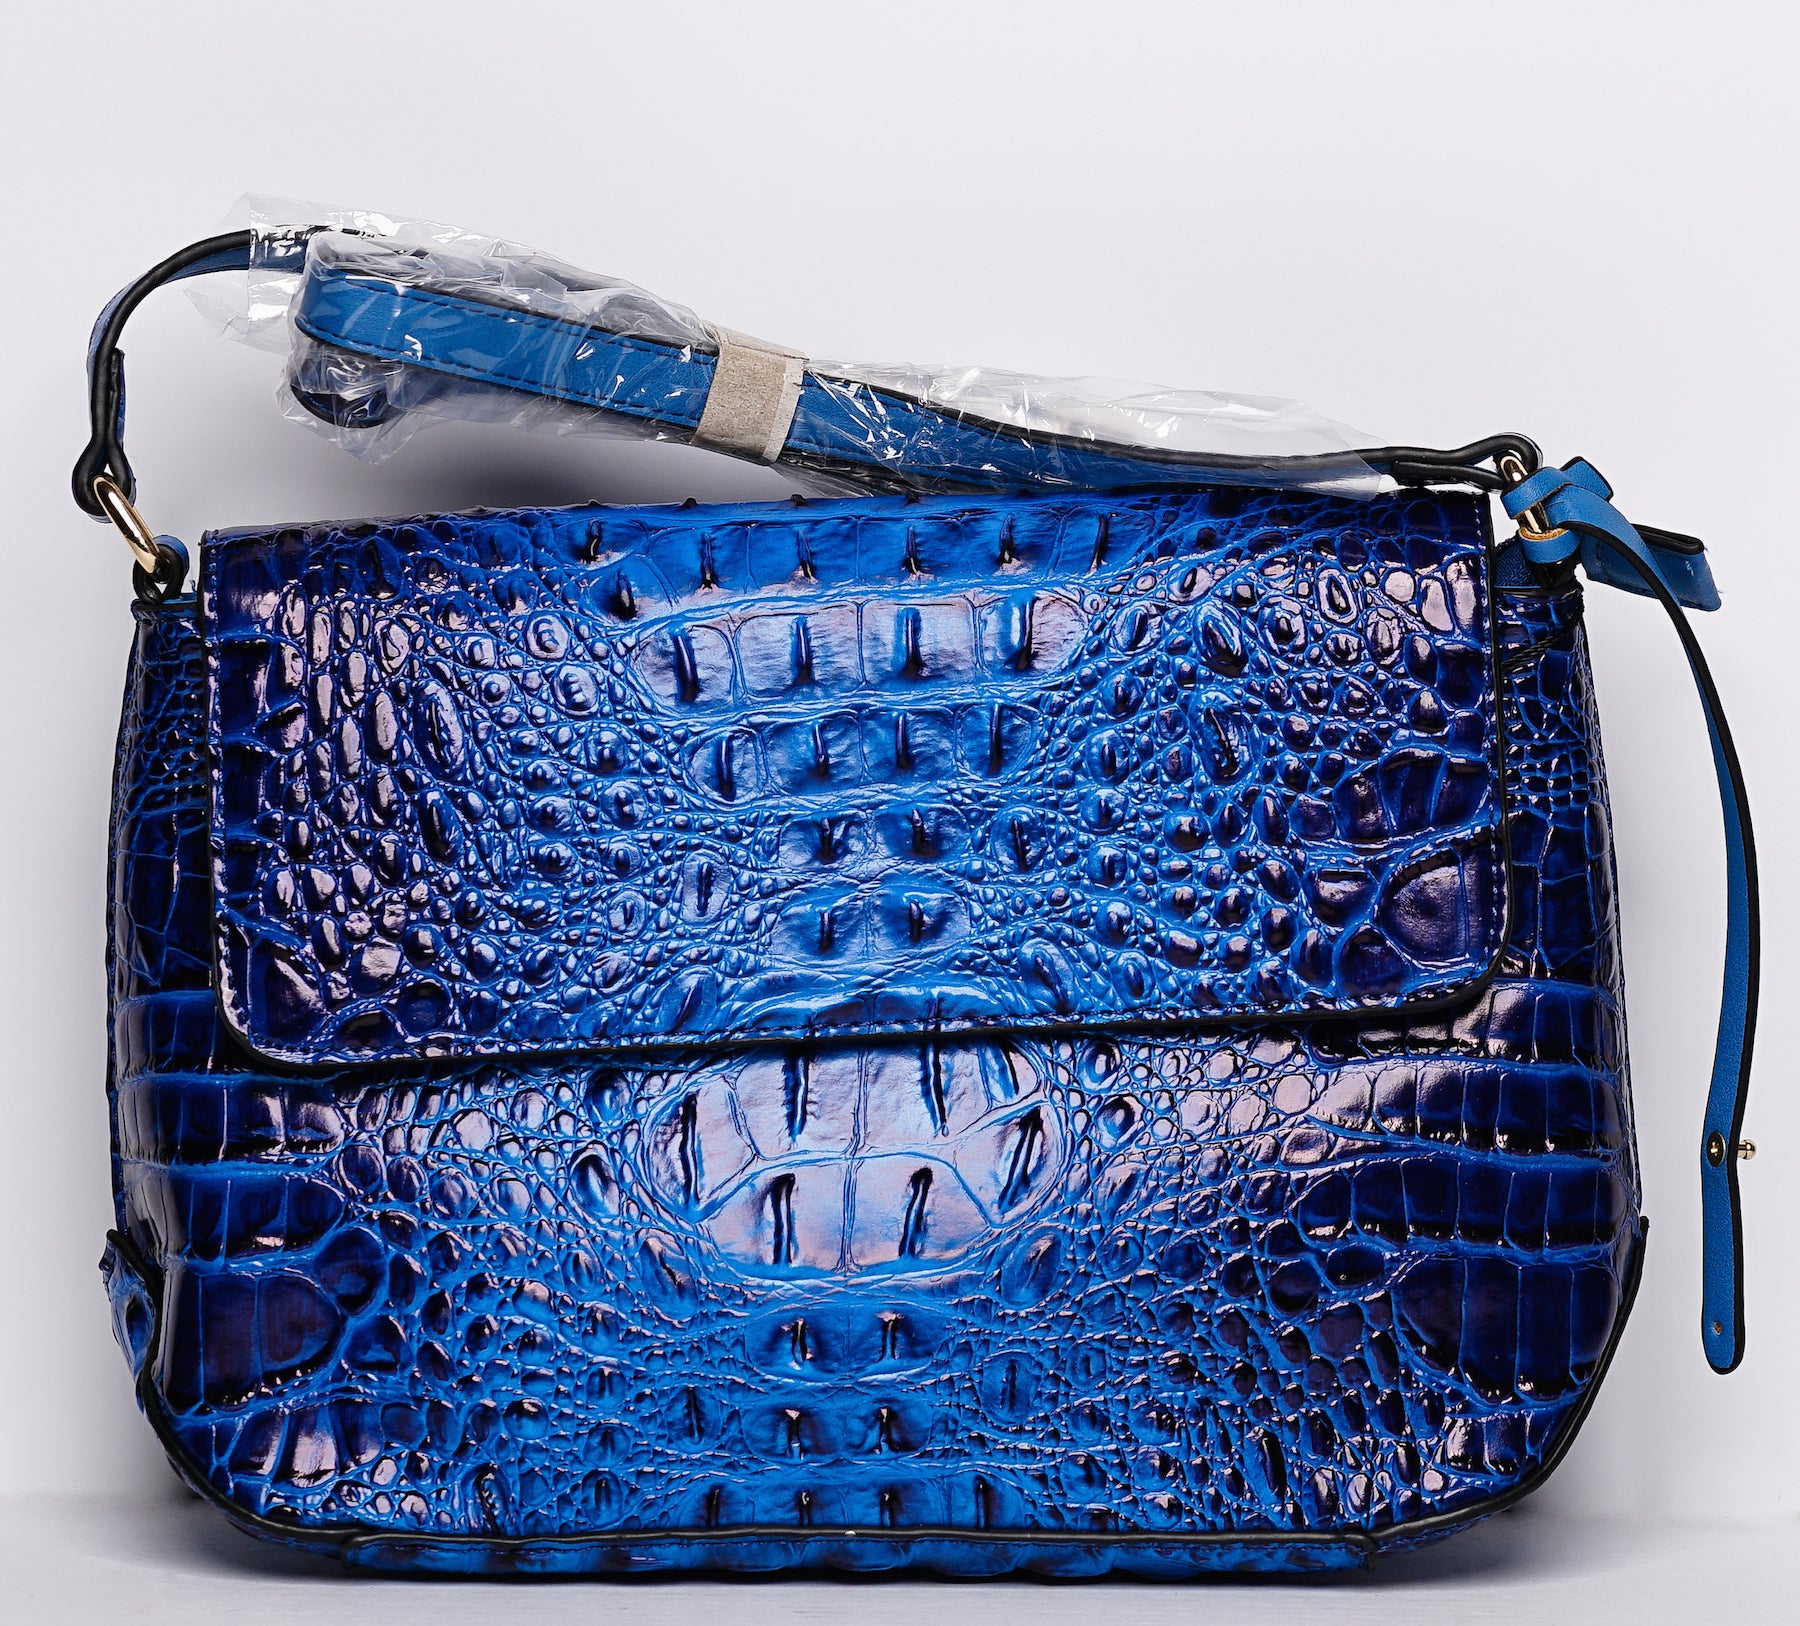 blue crocodile bag